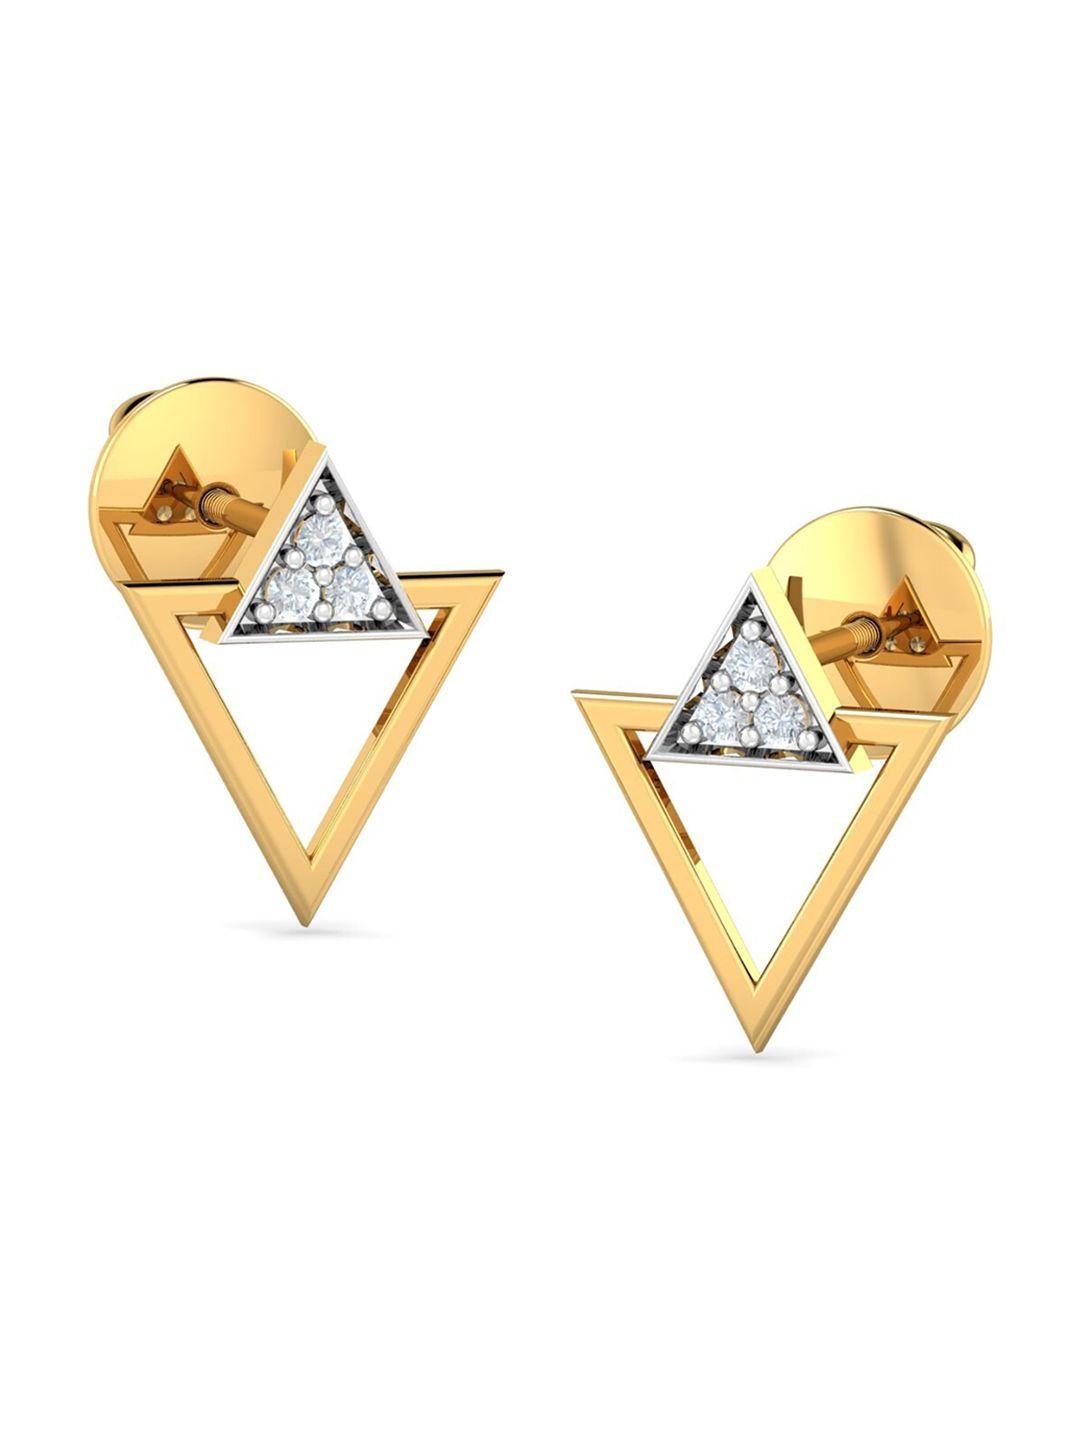 kuberbox-18kt-gold-diamond-stud-earrings--1.53-gm